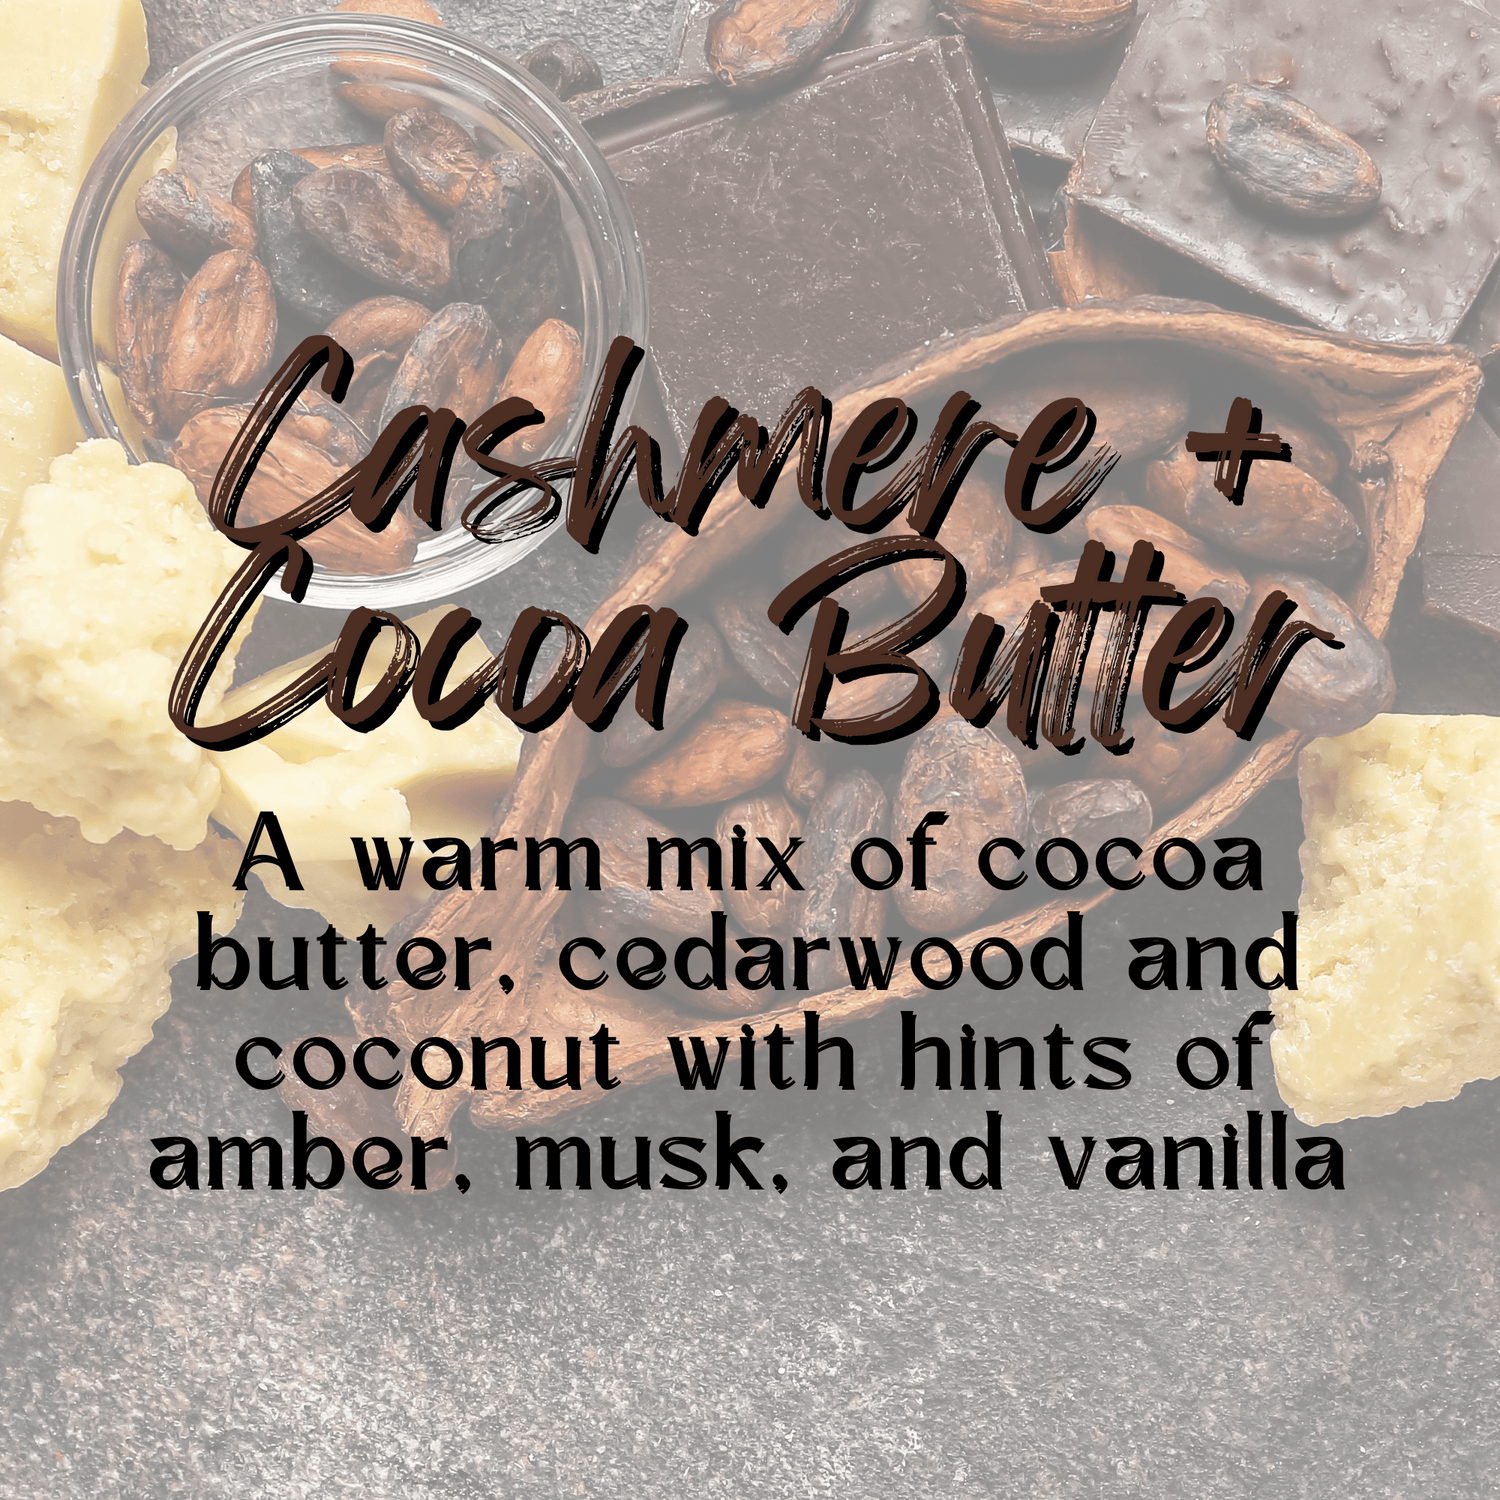 Cashmere + Cocoa Butter